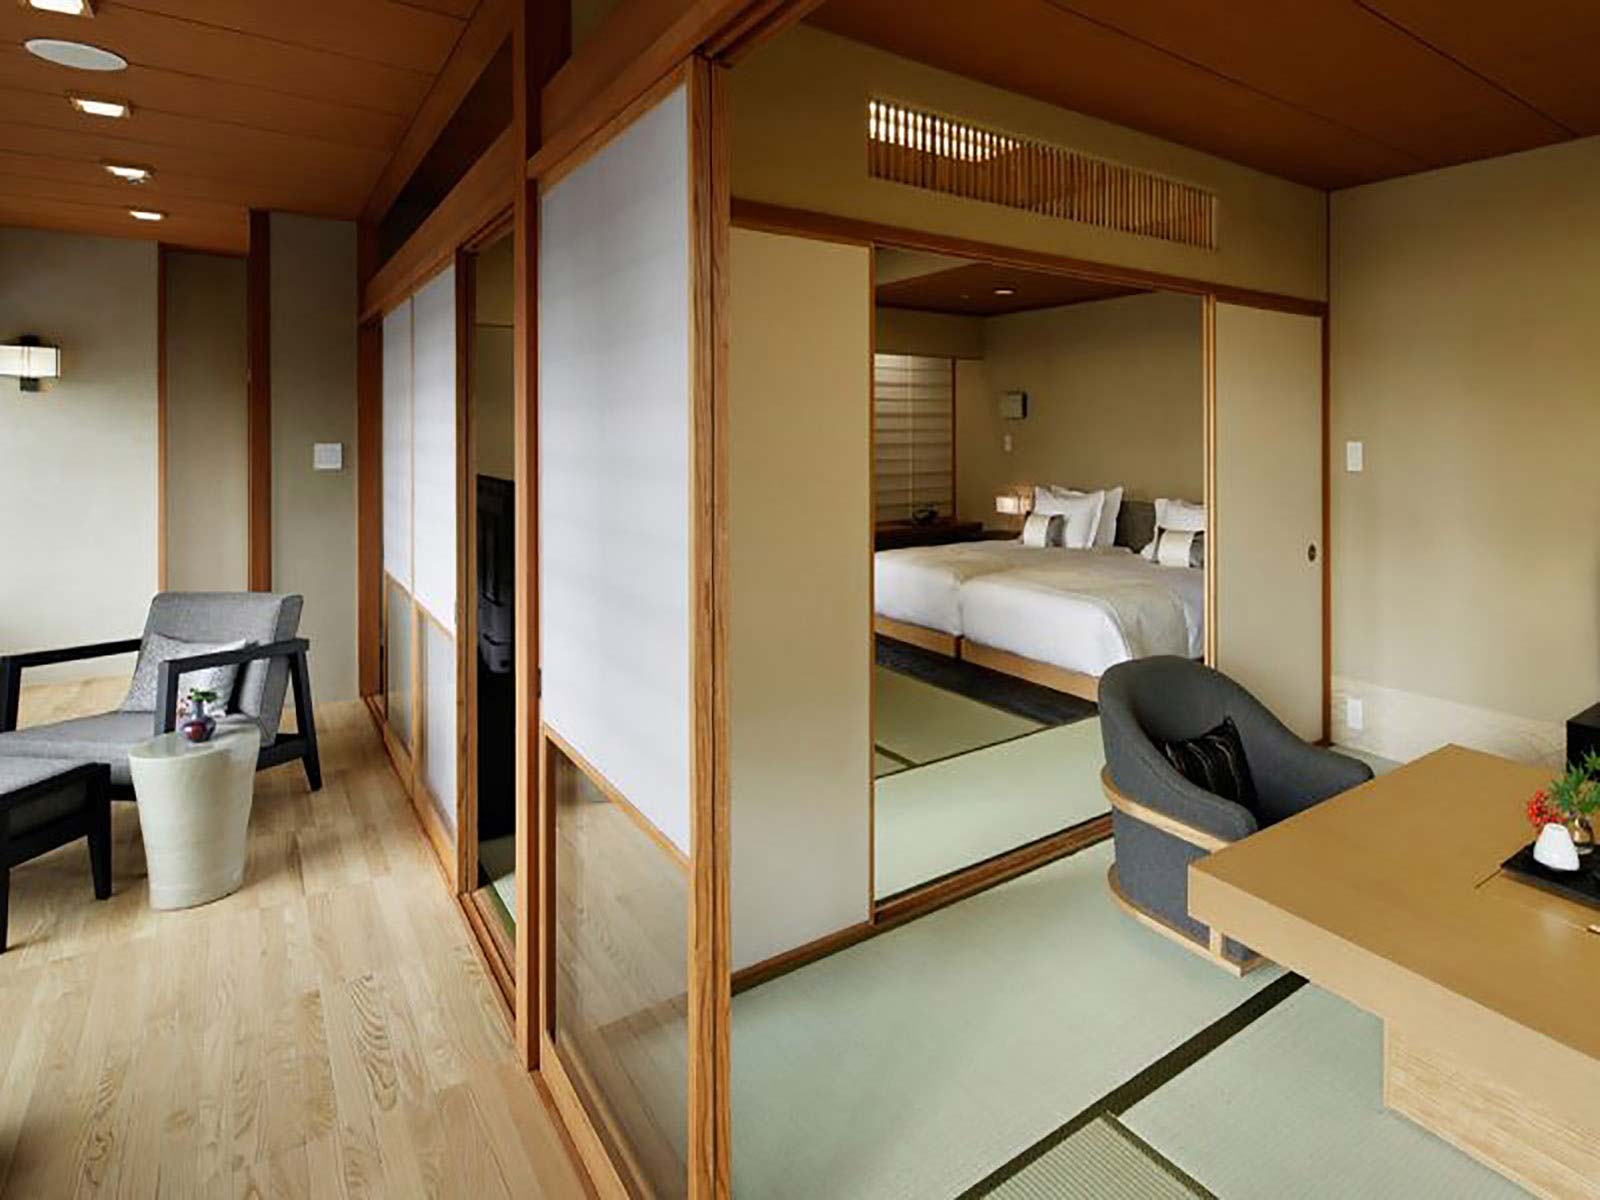 TAKANAWA HANAKOHRO – “Ryokan” has been created with a total of 16 rooms